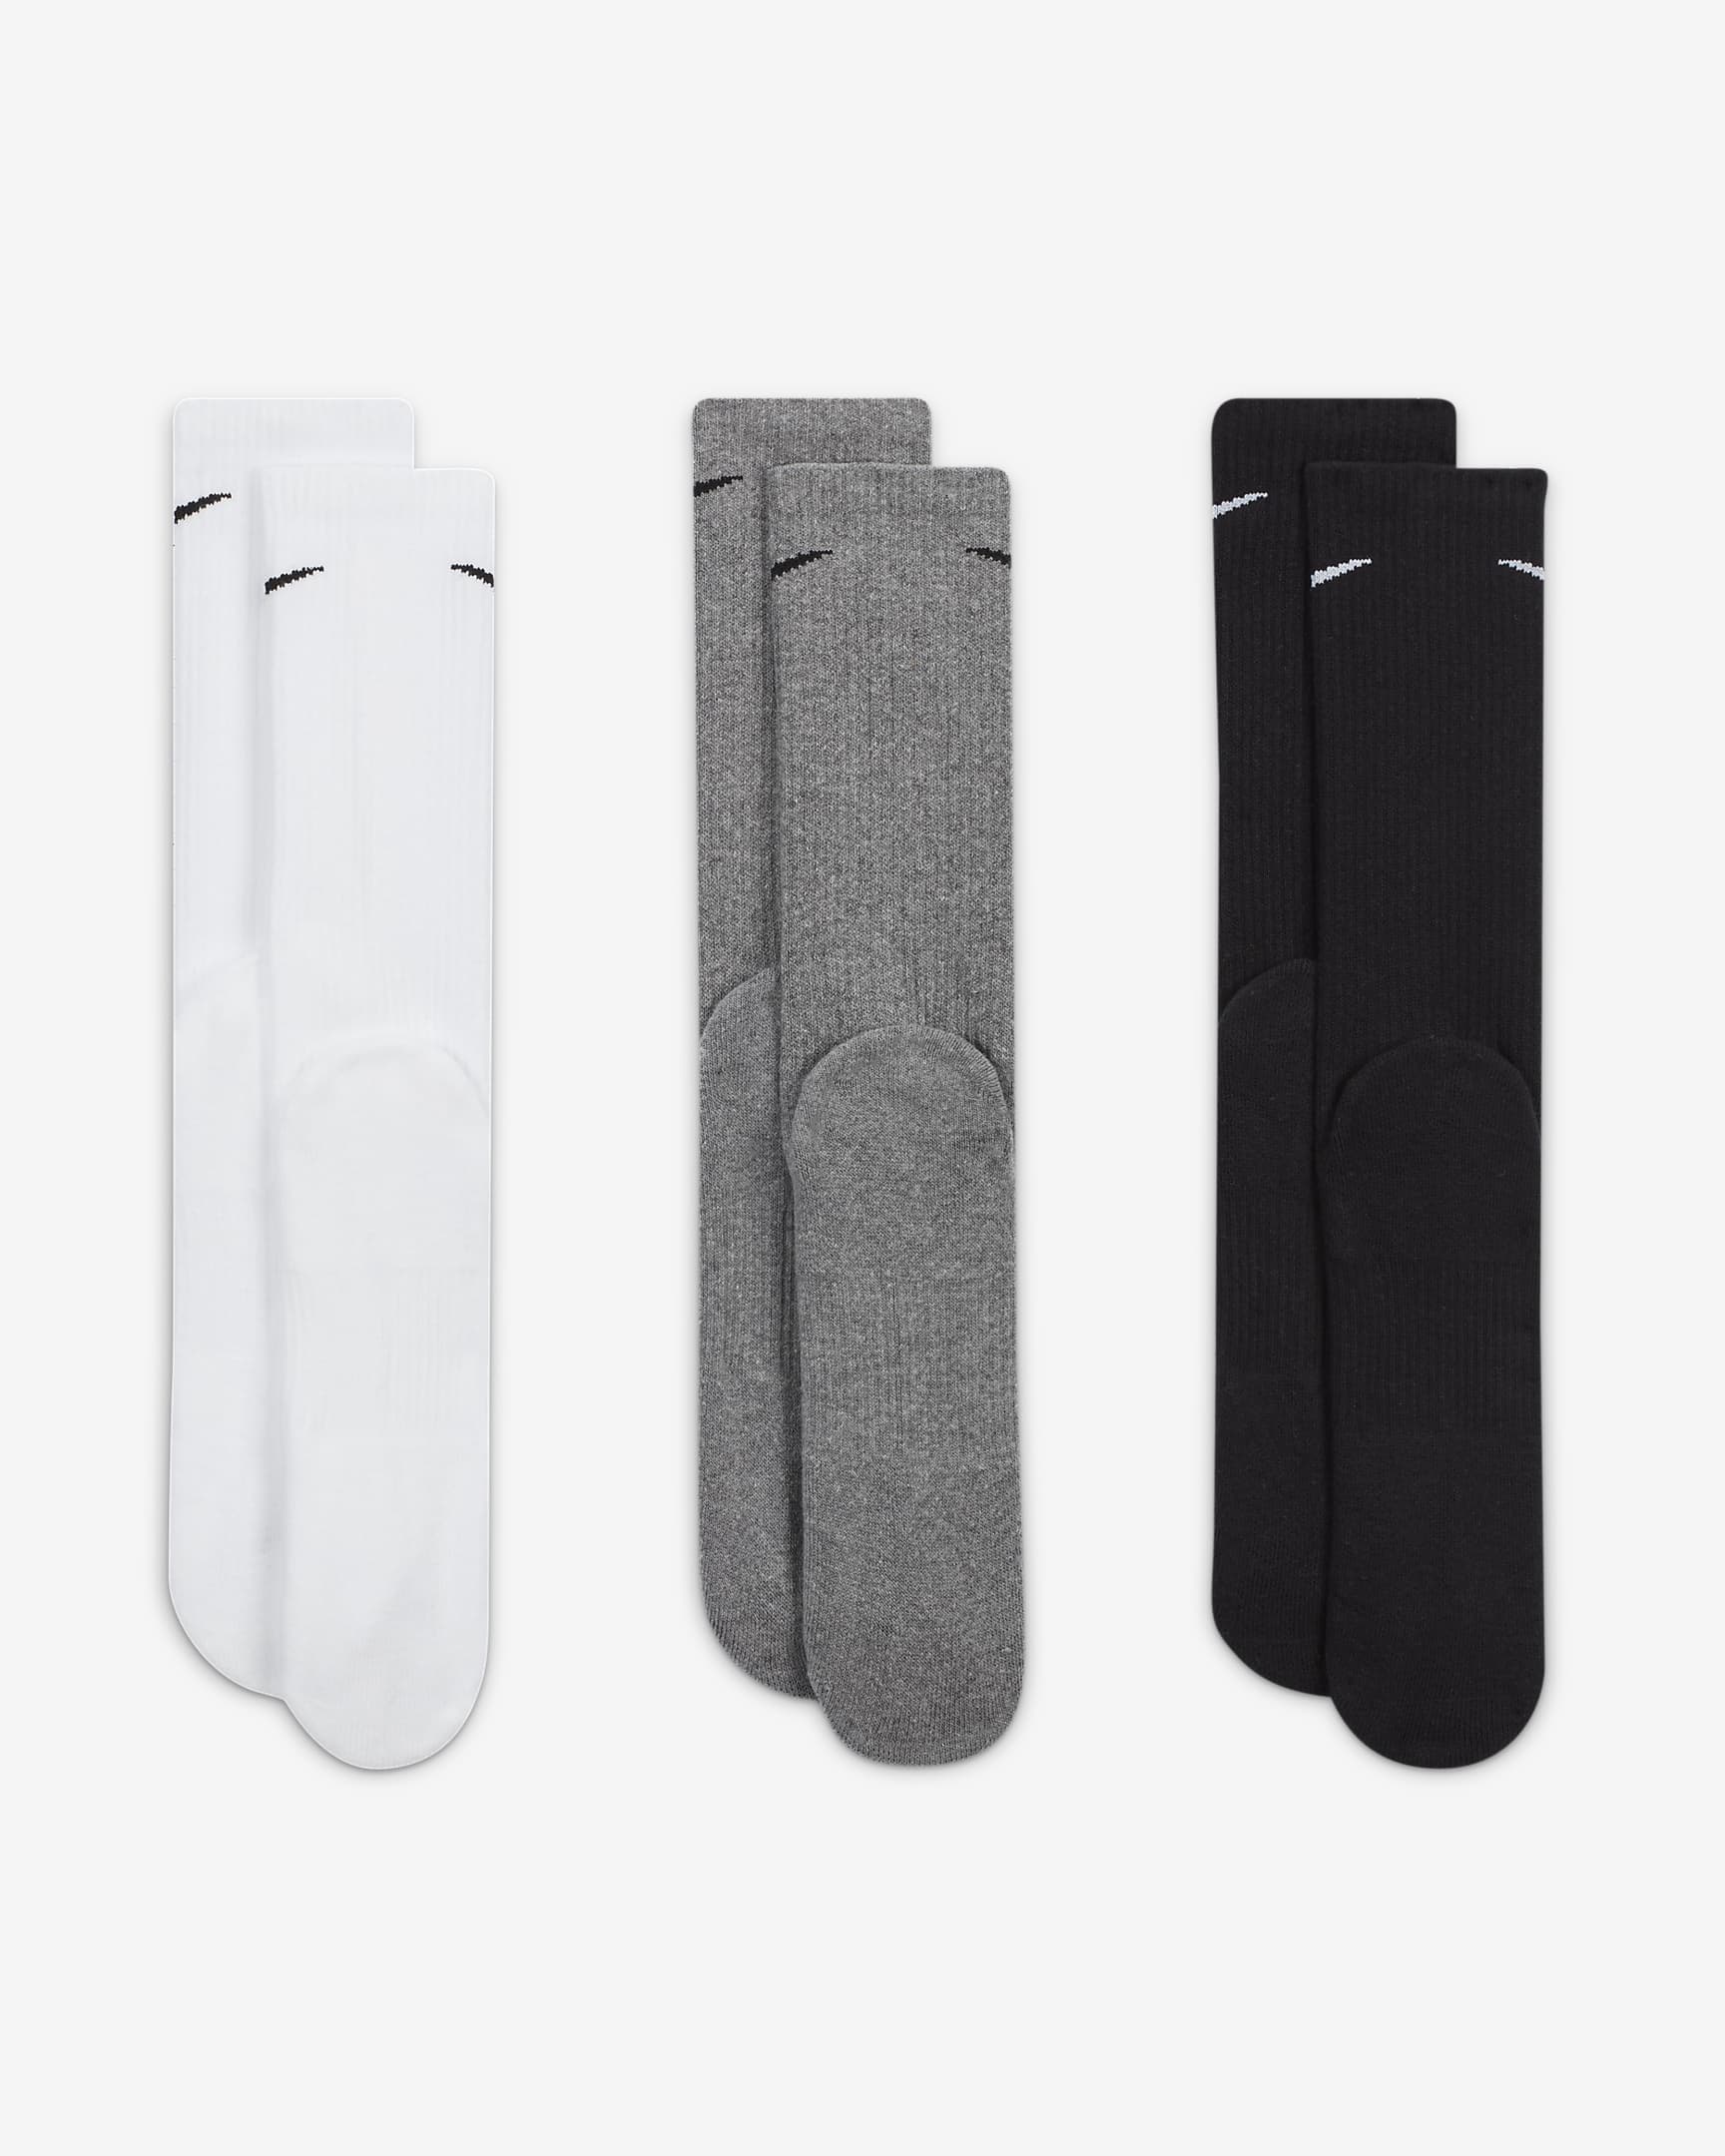 Nike Everyday Plus Cushioned Training Crew Socks (3 Pairs) - Multi-Colour